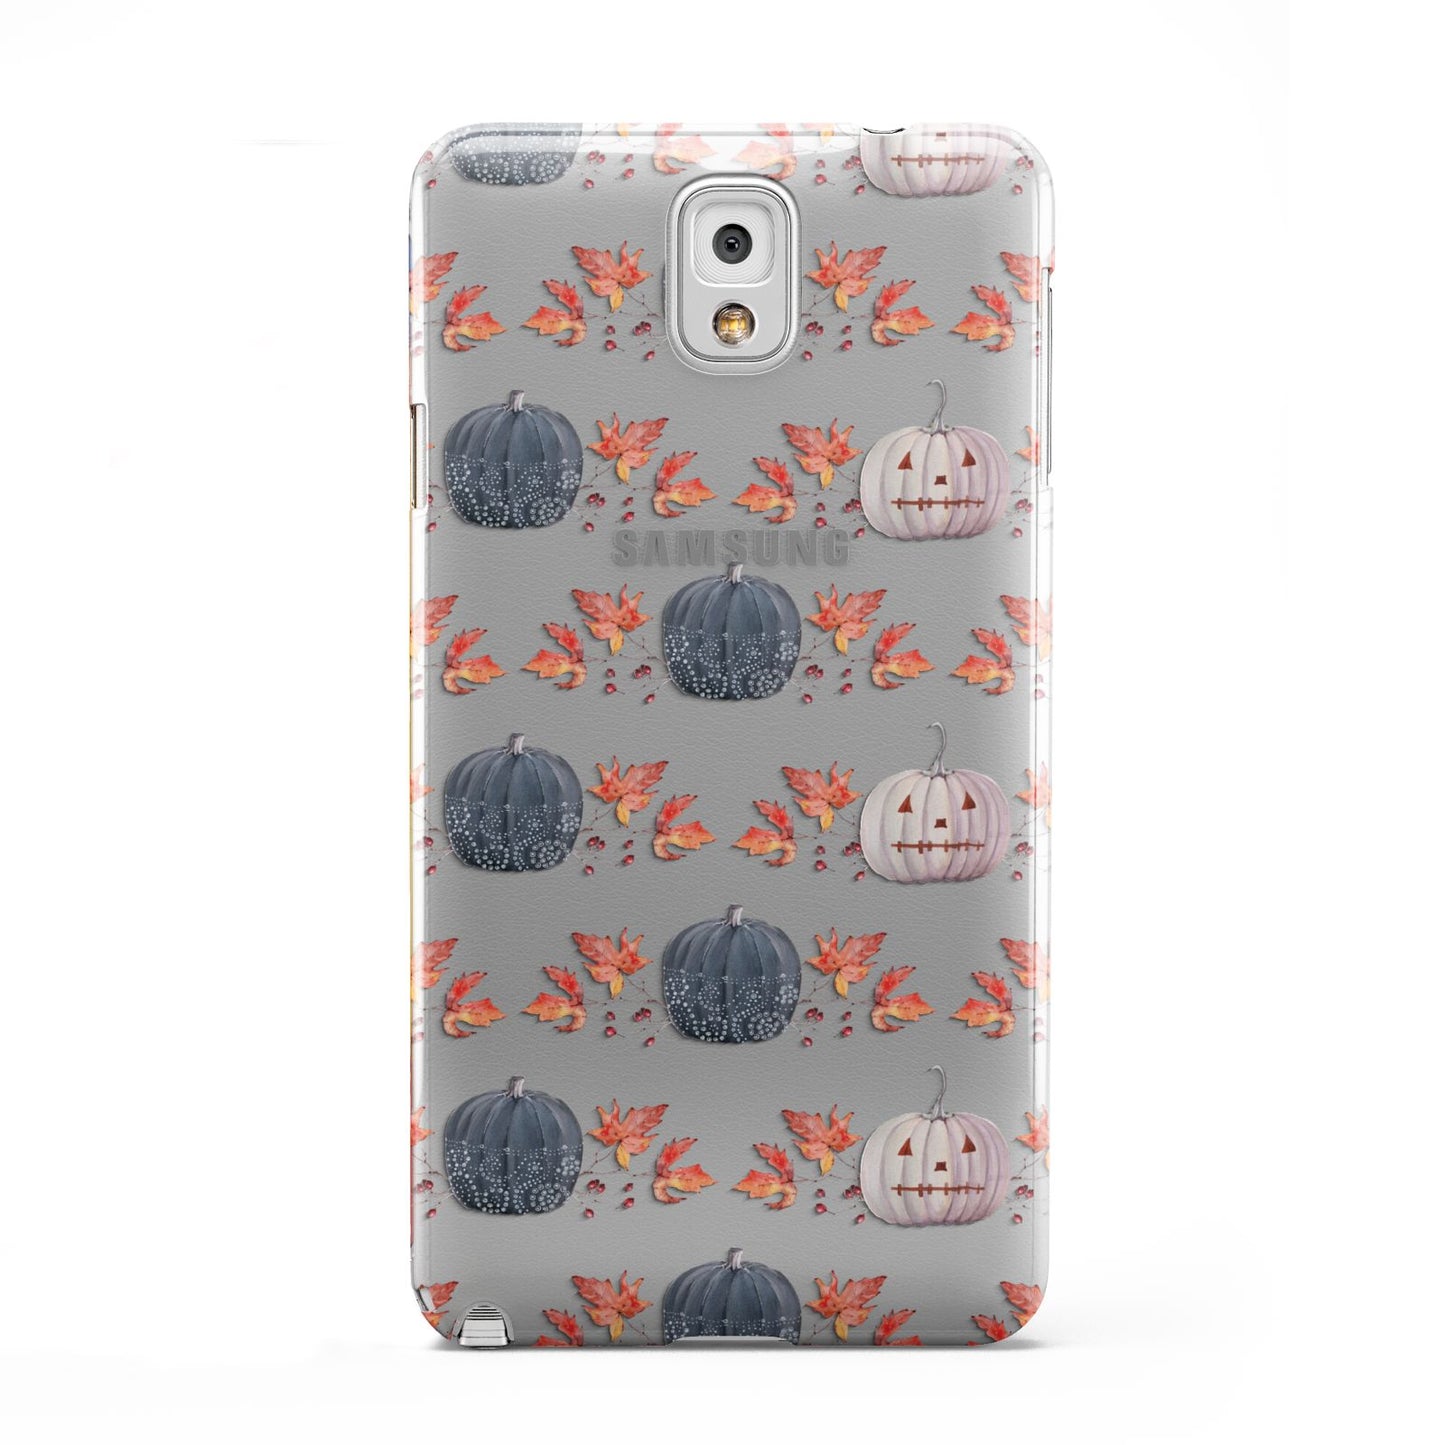 Pumpkin Autumn Leaves Samsung Galaxy Note 3 Case